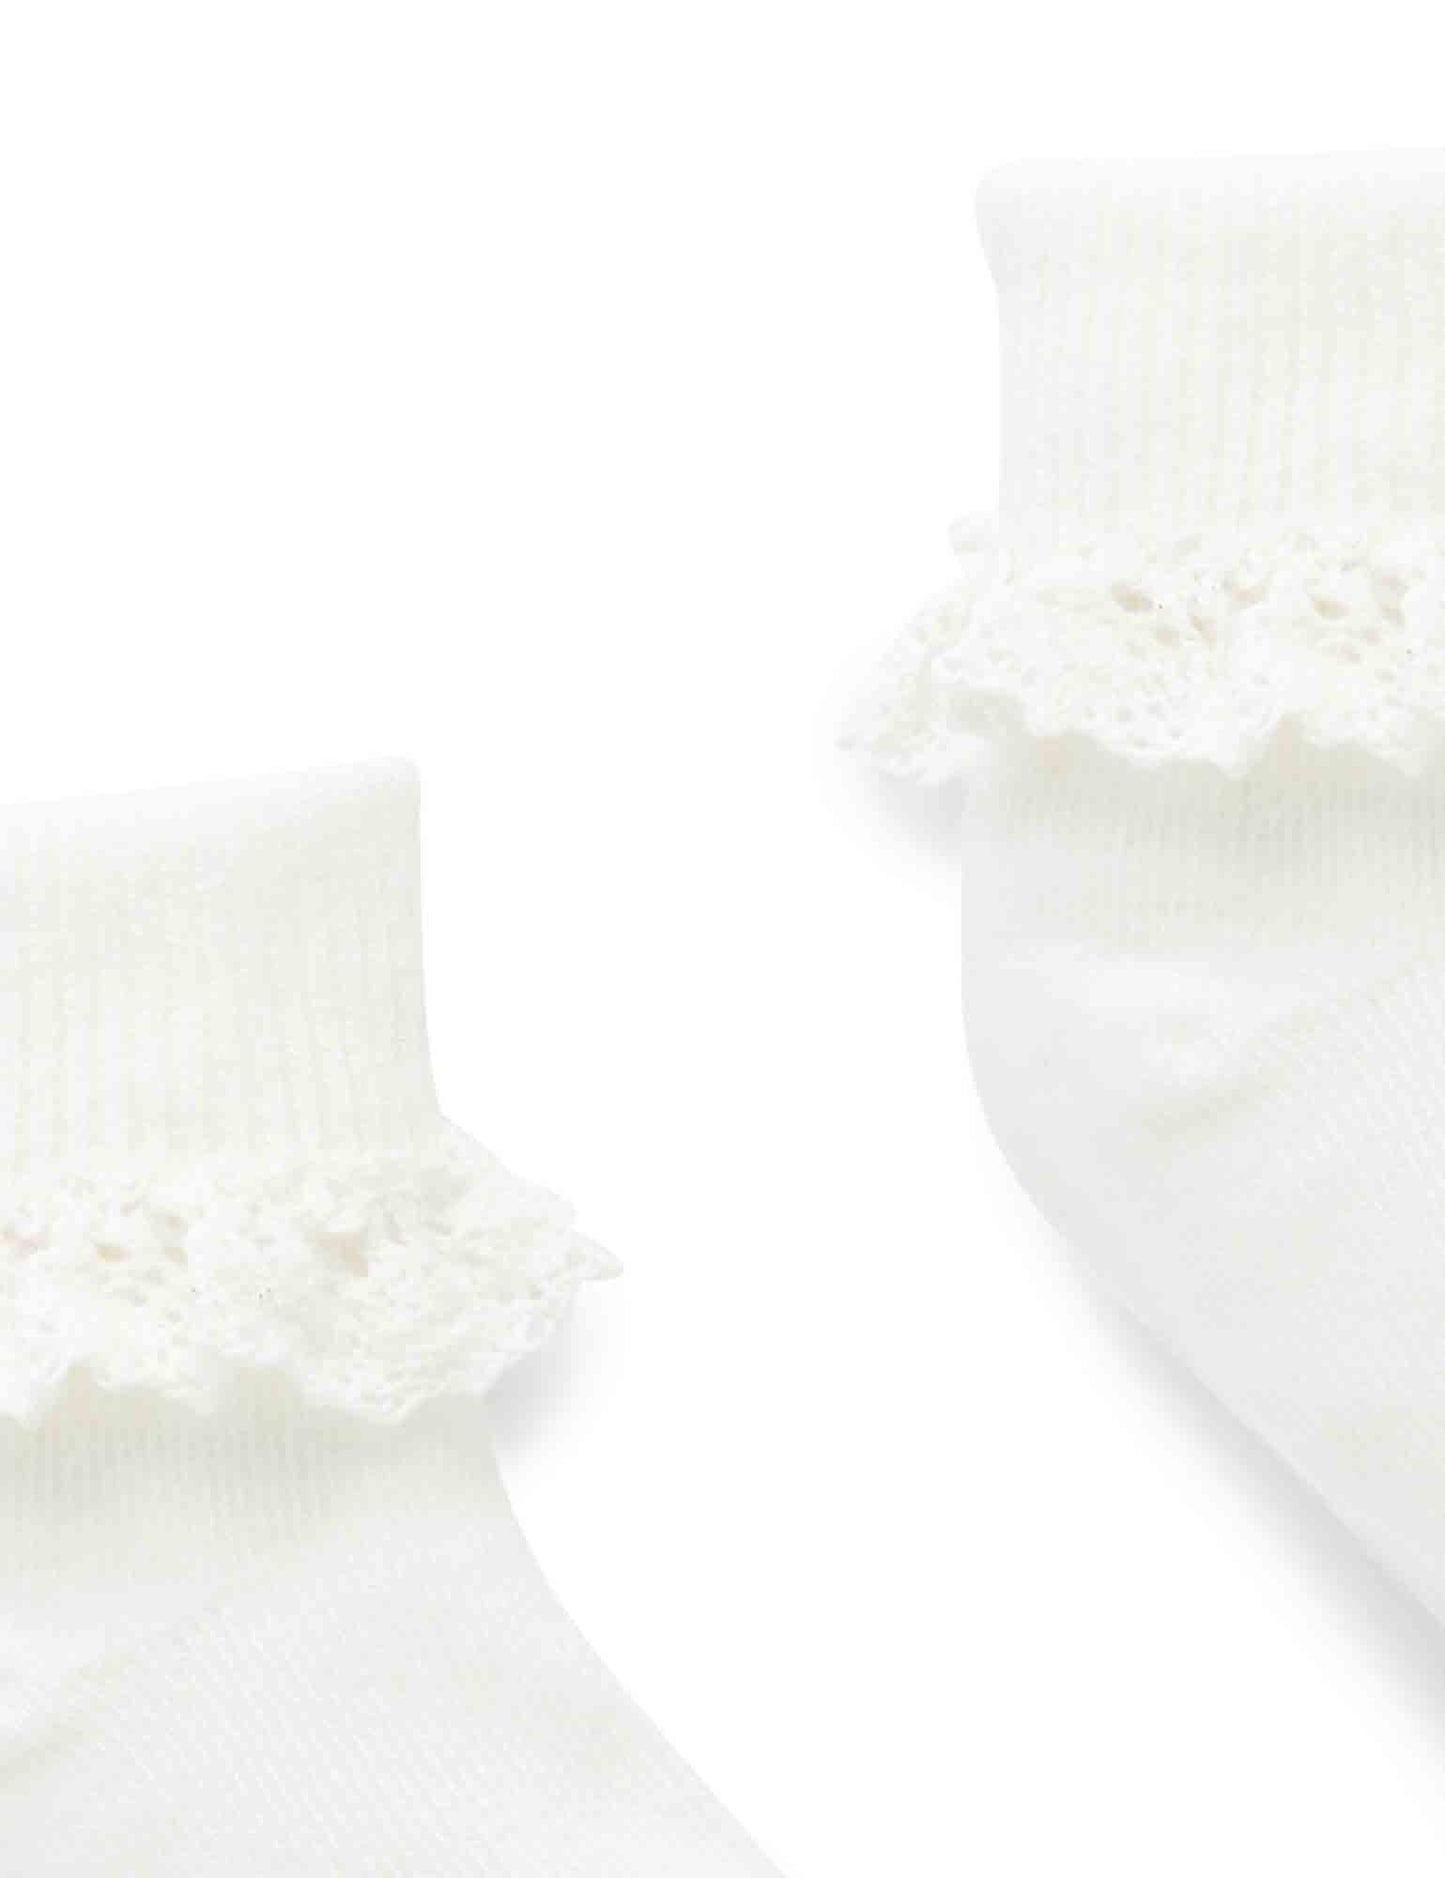 Purebaby Lace Sock